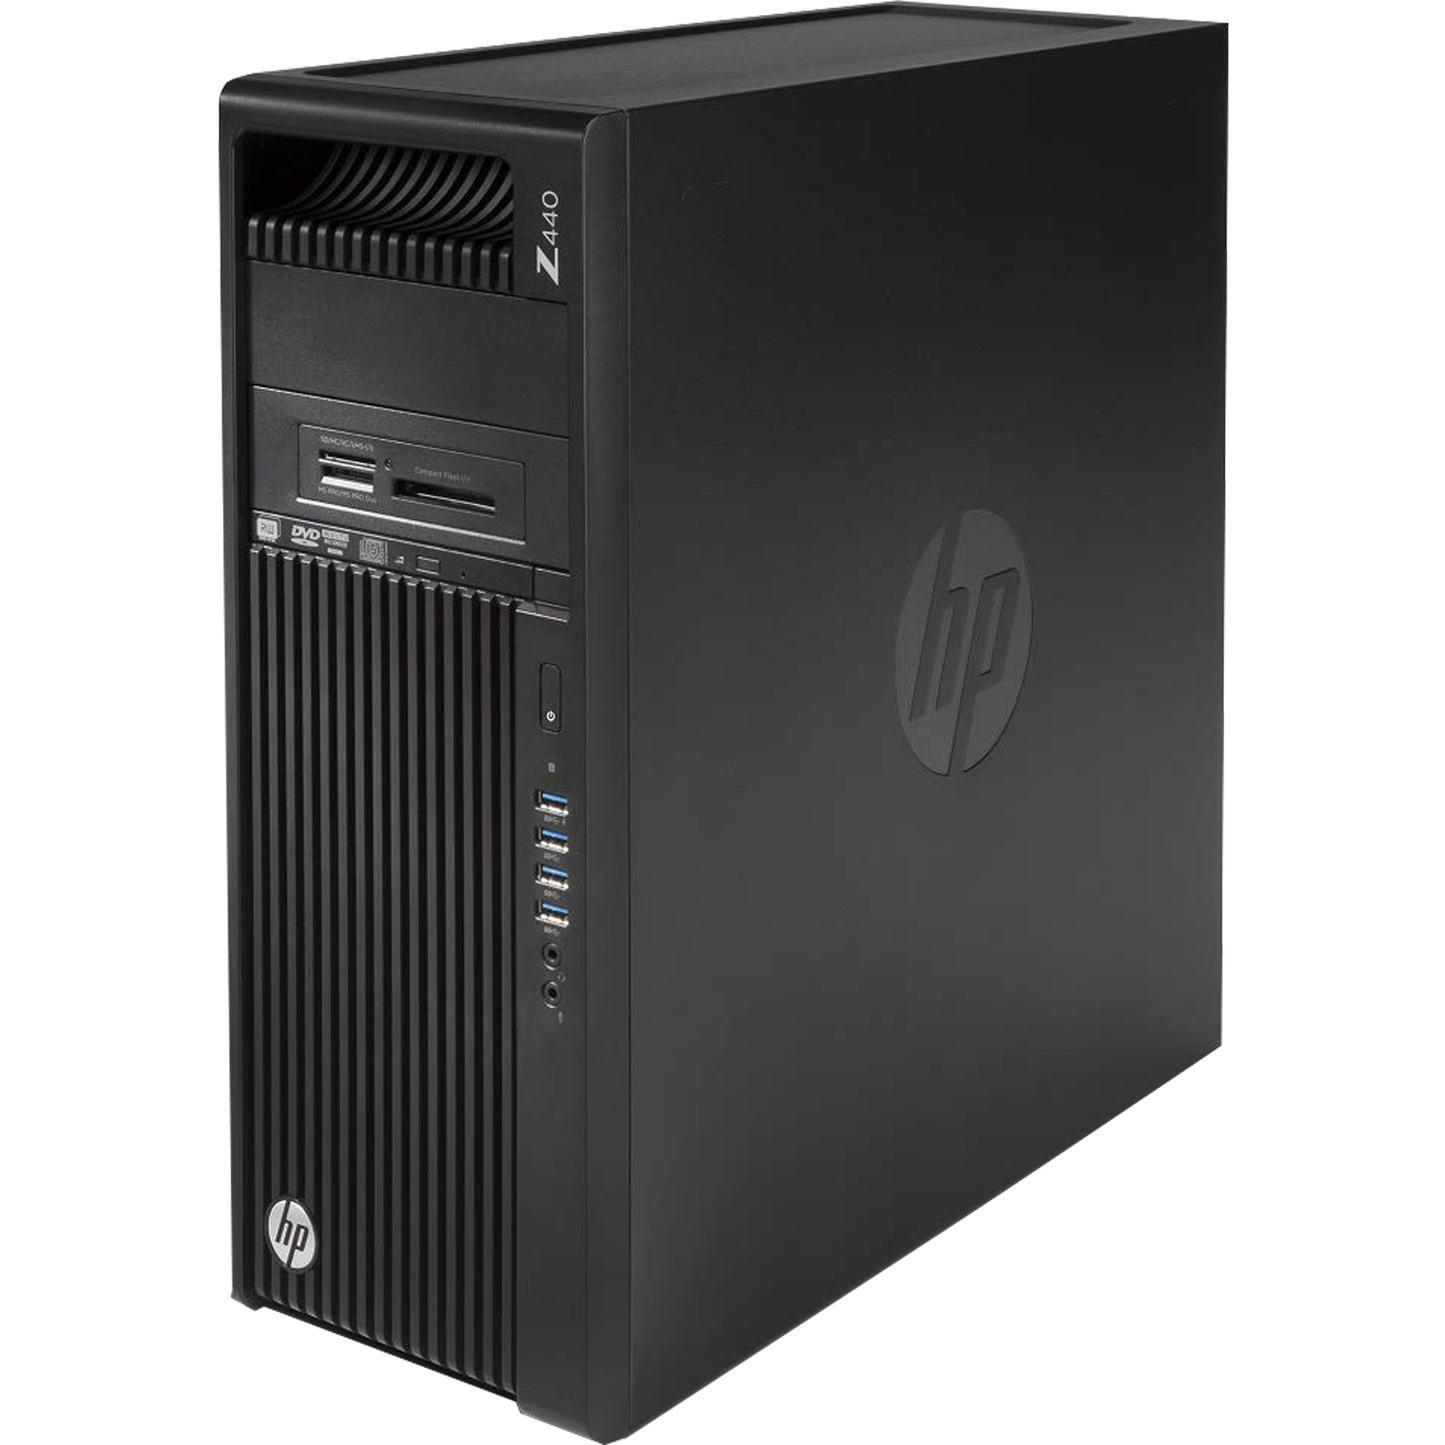 HP Z440 Workstation Intel Xeon Tower PC with 4GB GPU + 23" Monitor Desktop Computers